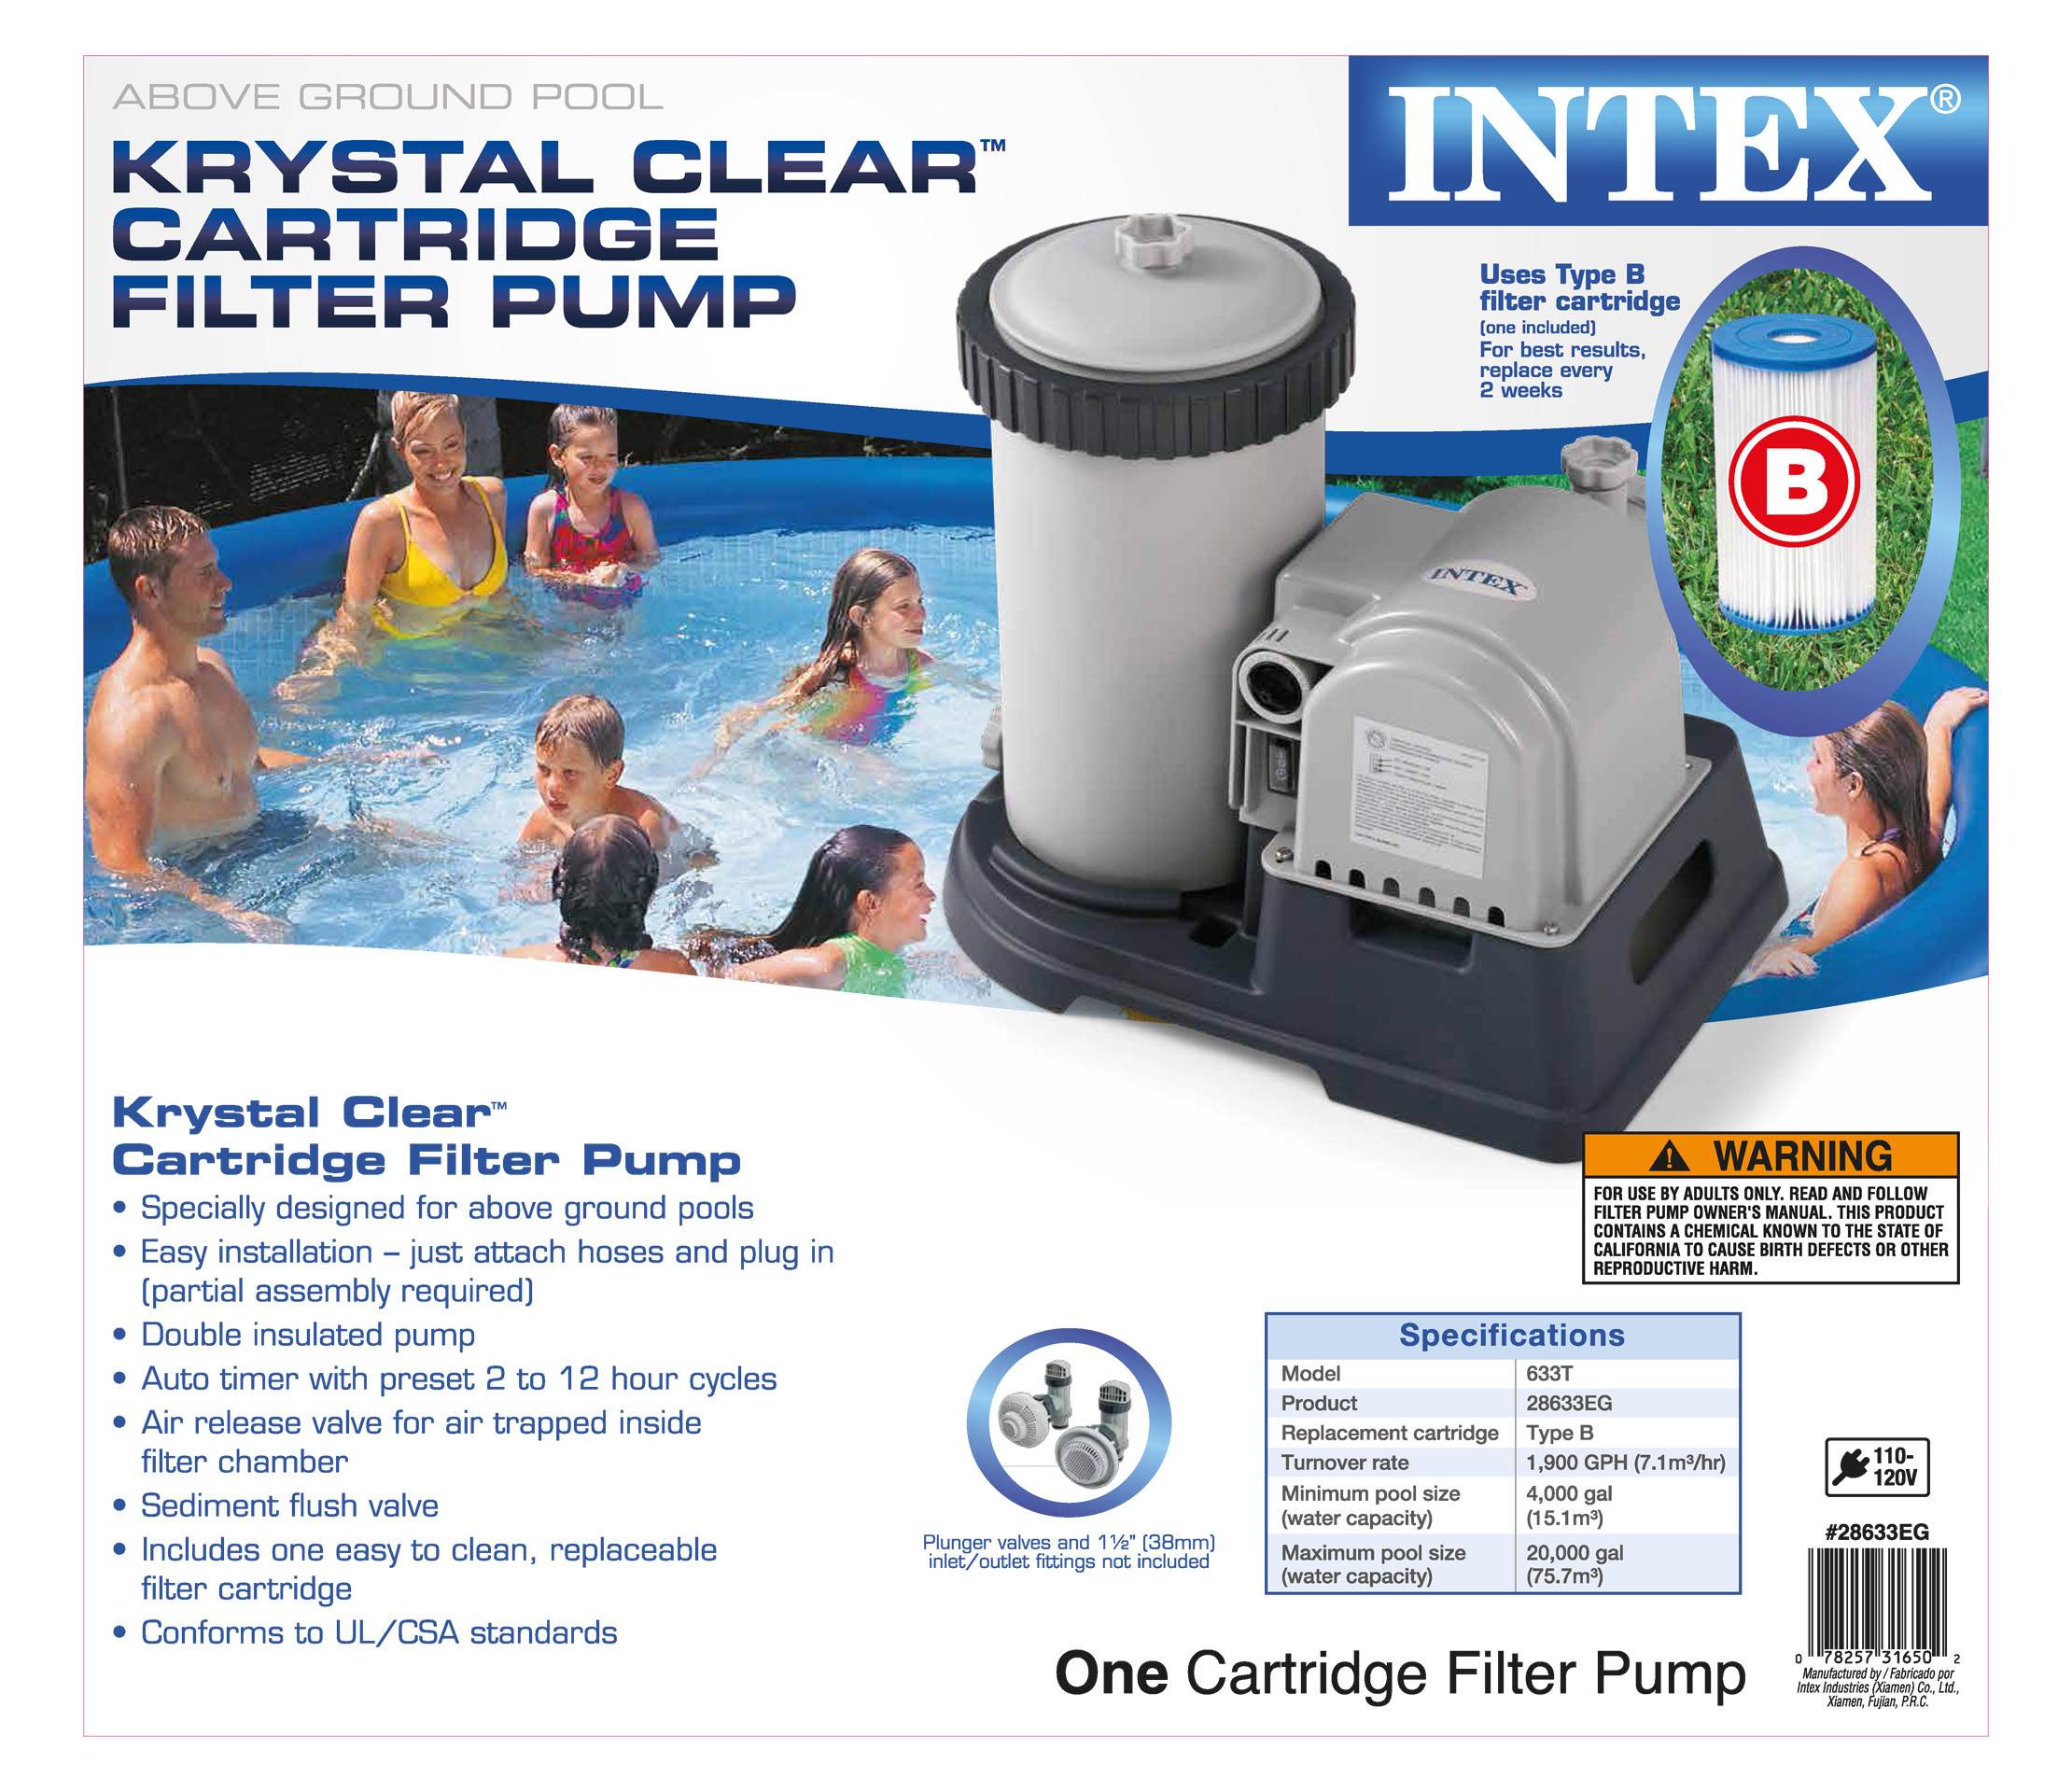 Intex 2500 GPH Krystal Clear GFCI Pool Filter Pump refurbished 28633EG 